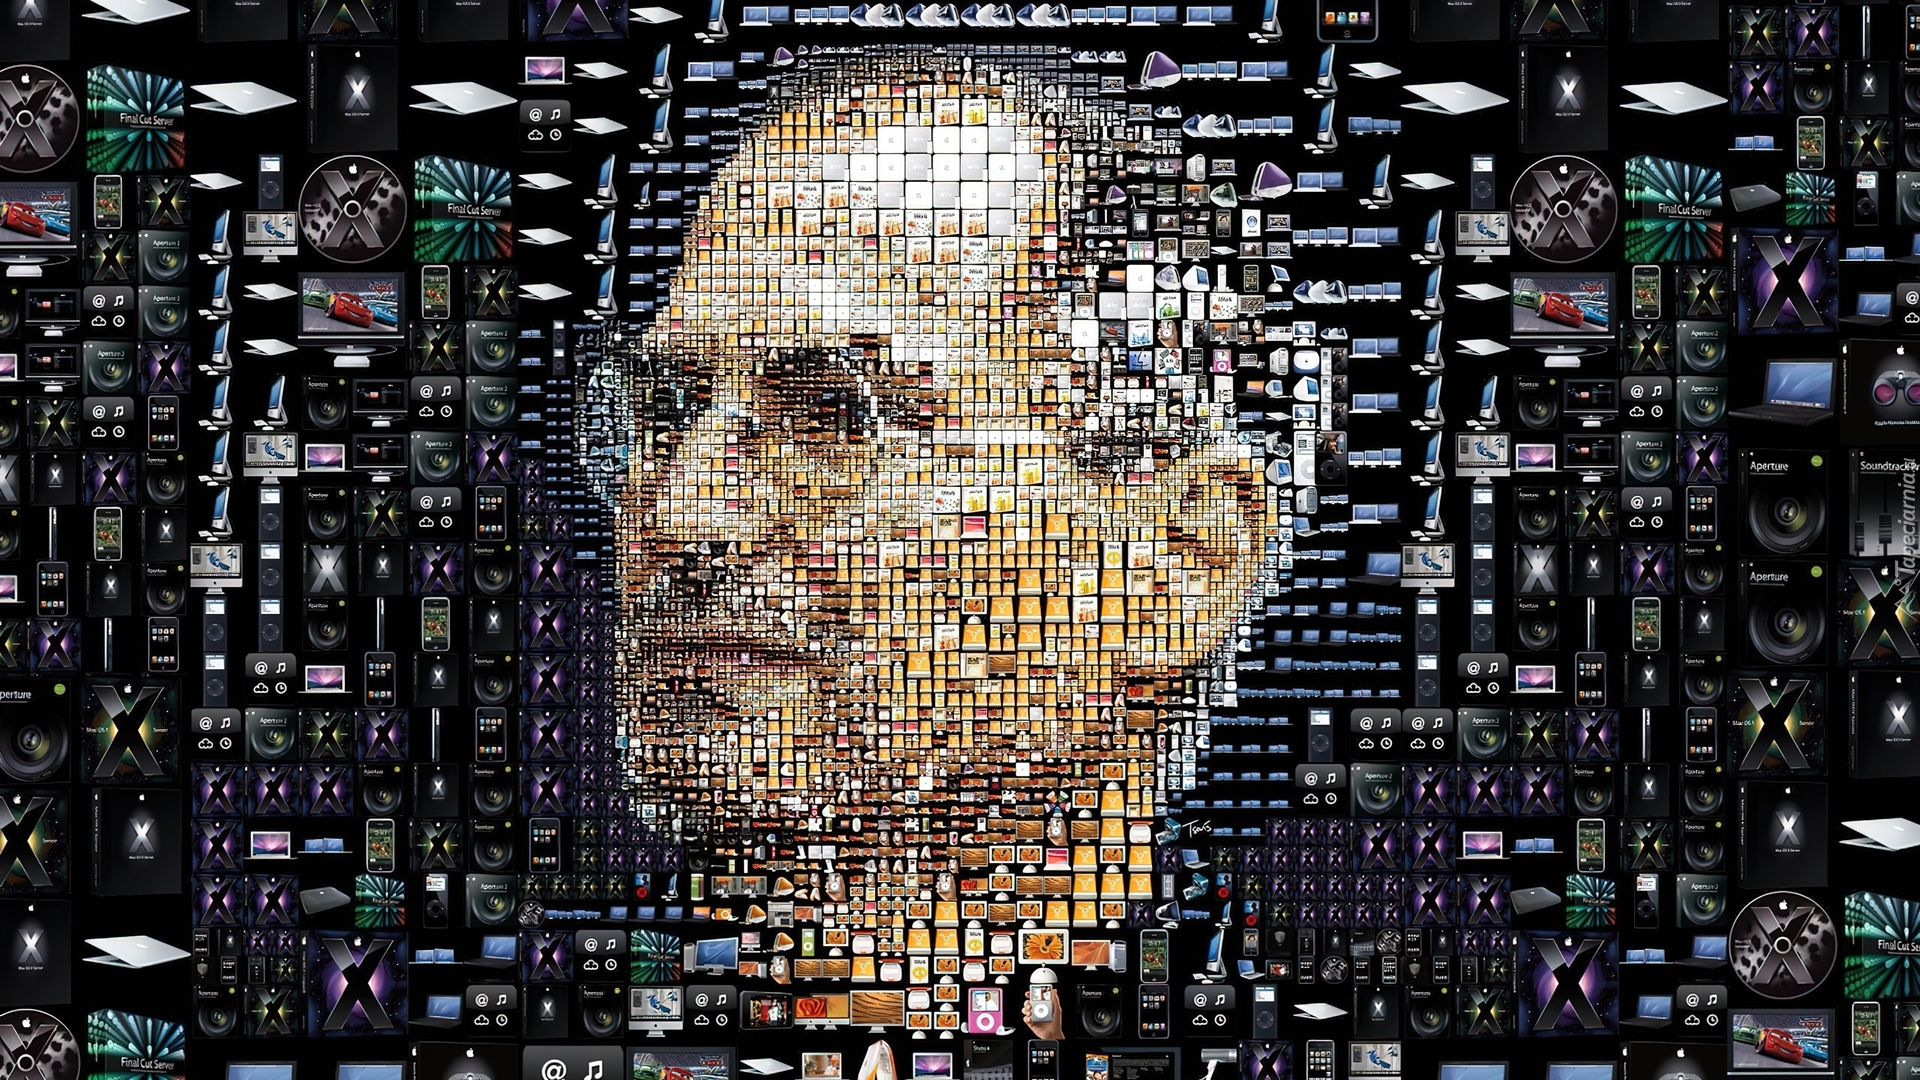 Steve Jobs, Apple, Mac, iPod, iPhone